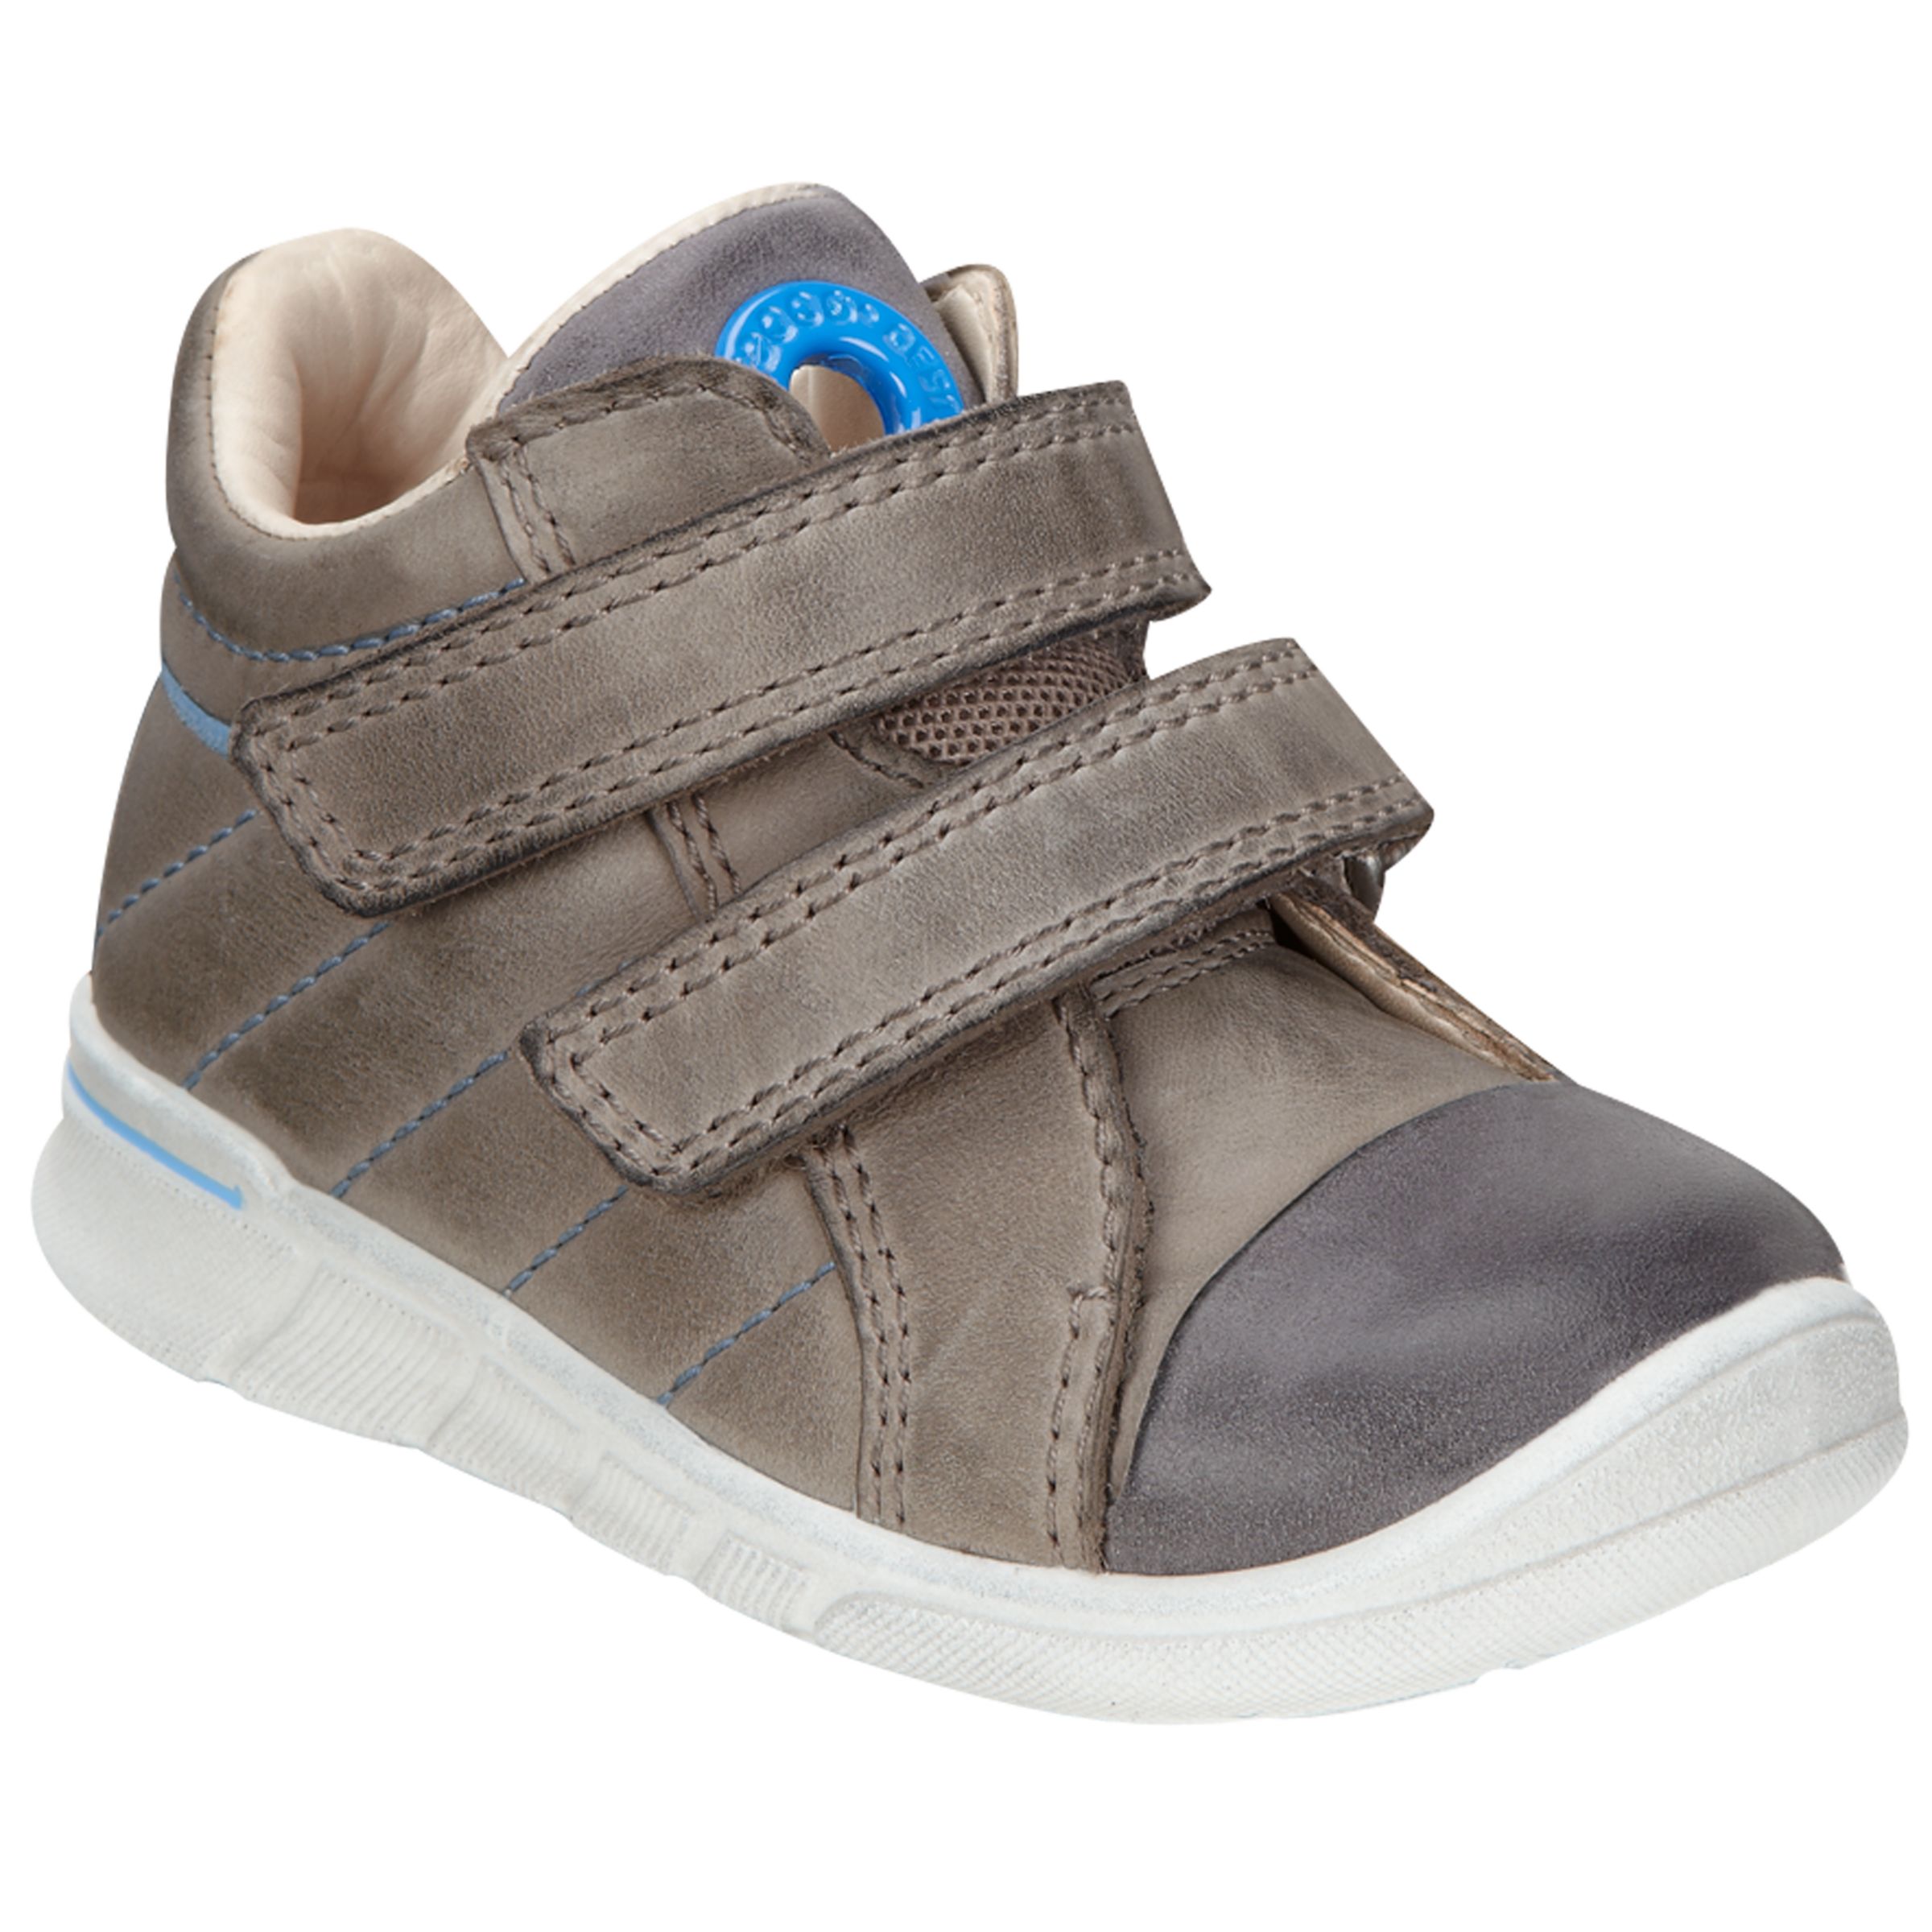 ECCO Children's Suede Riptape Shoes, Grey